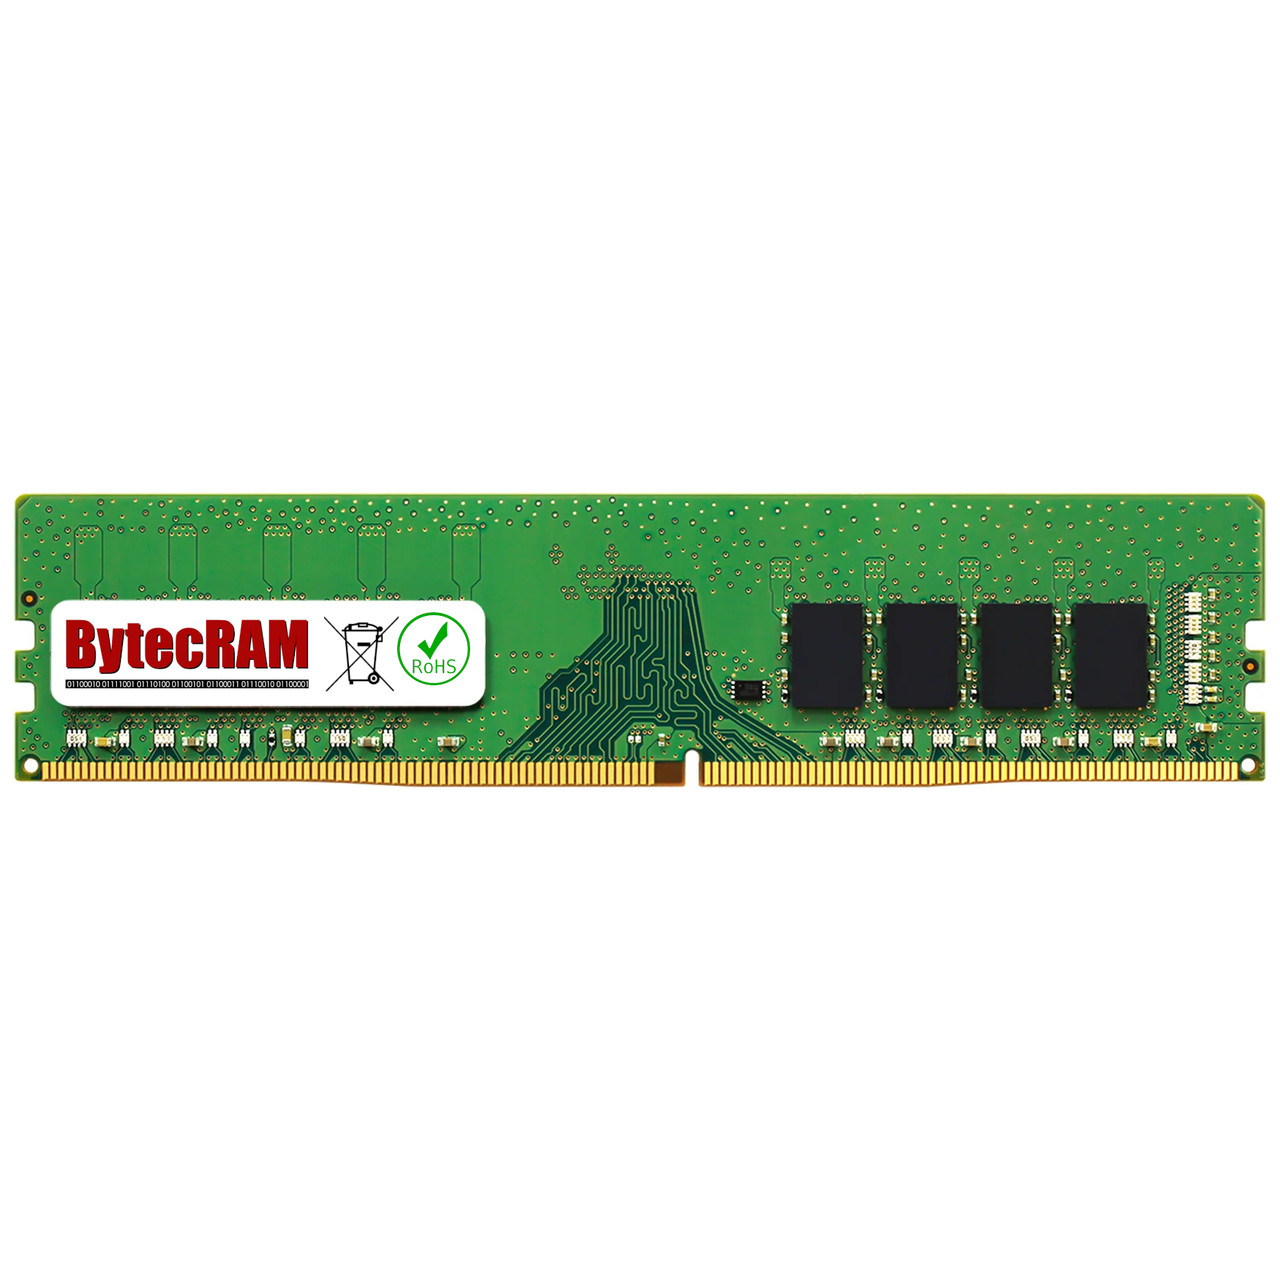 eBay*32GB Lenovo ThinkStation P330 2nd Gen 30CY DDR4 2933MHz UDIMM Memory RAM Upgrade